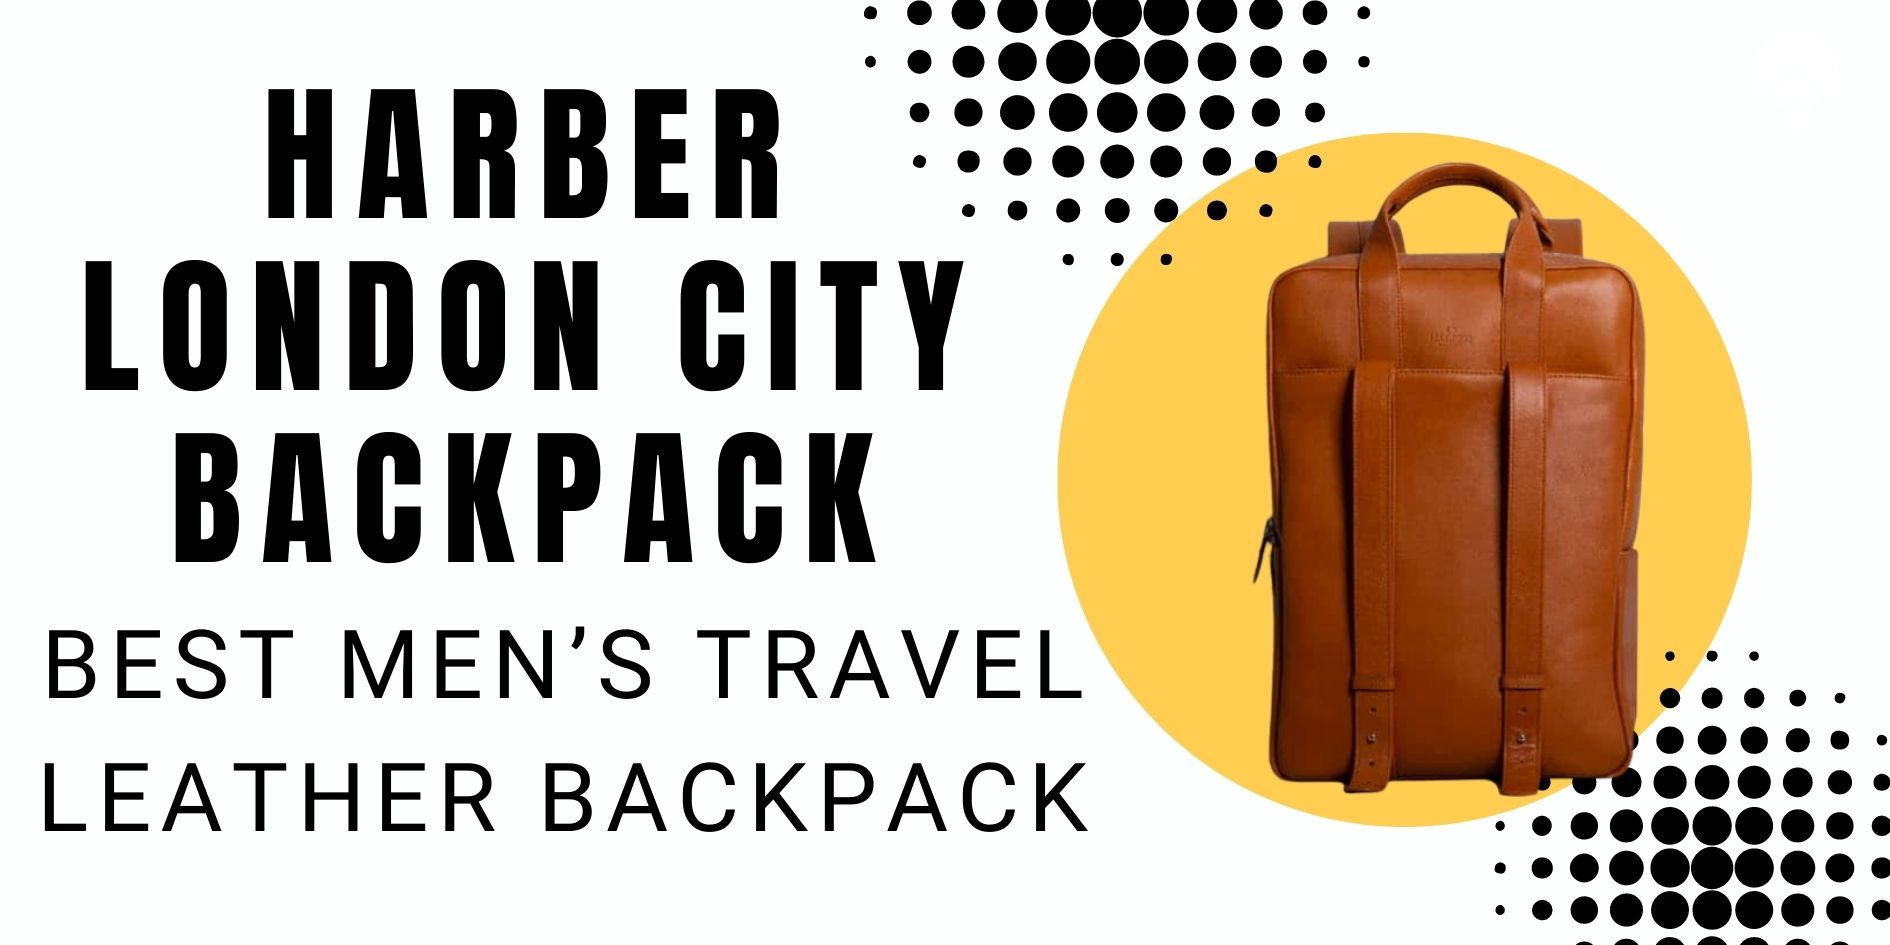 Best Men’s Travel Leather Backpack